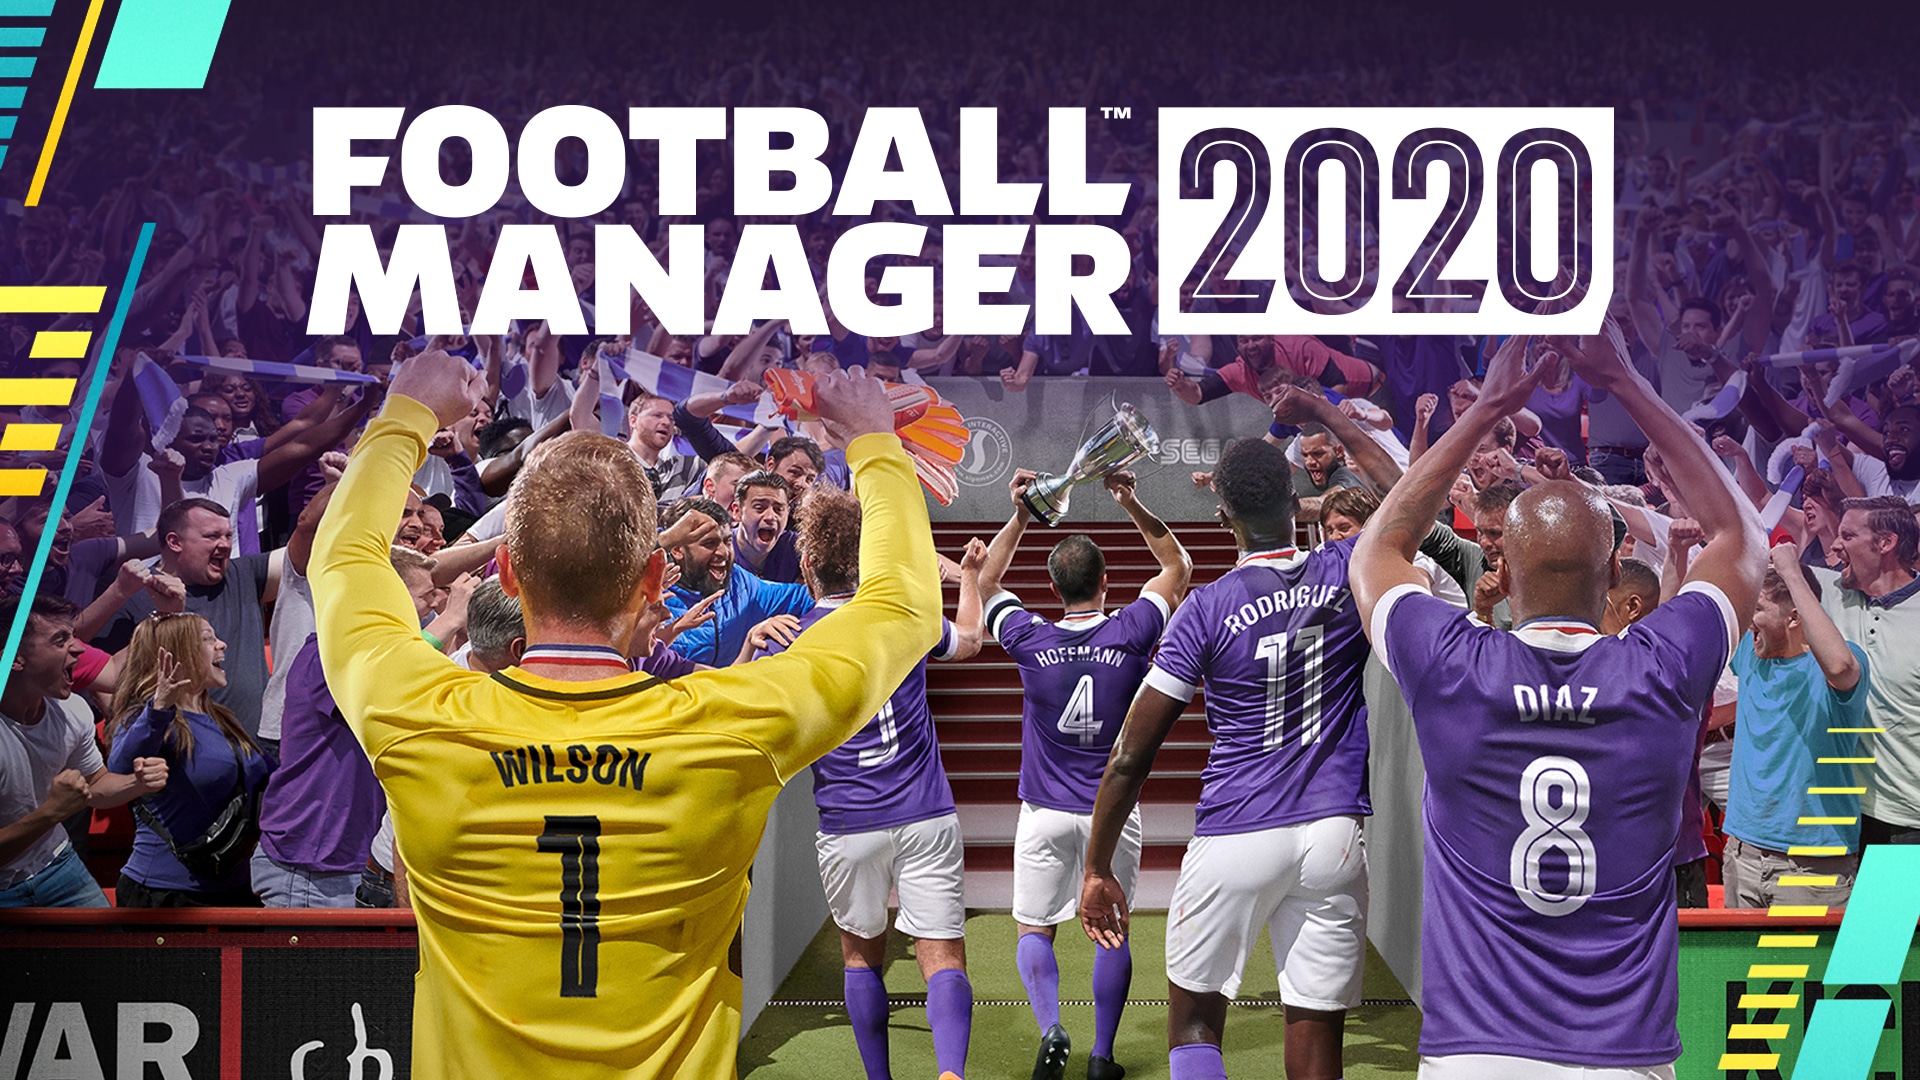 Football Manager 2020 gratis su Steam